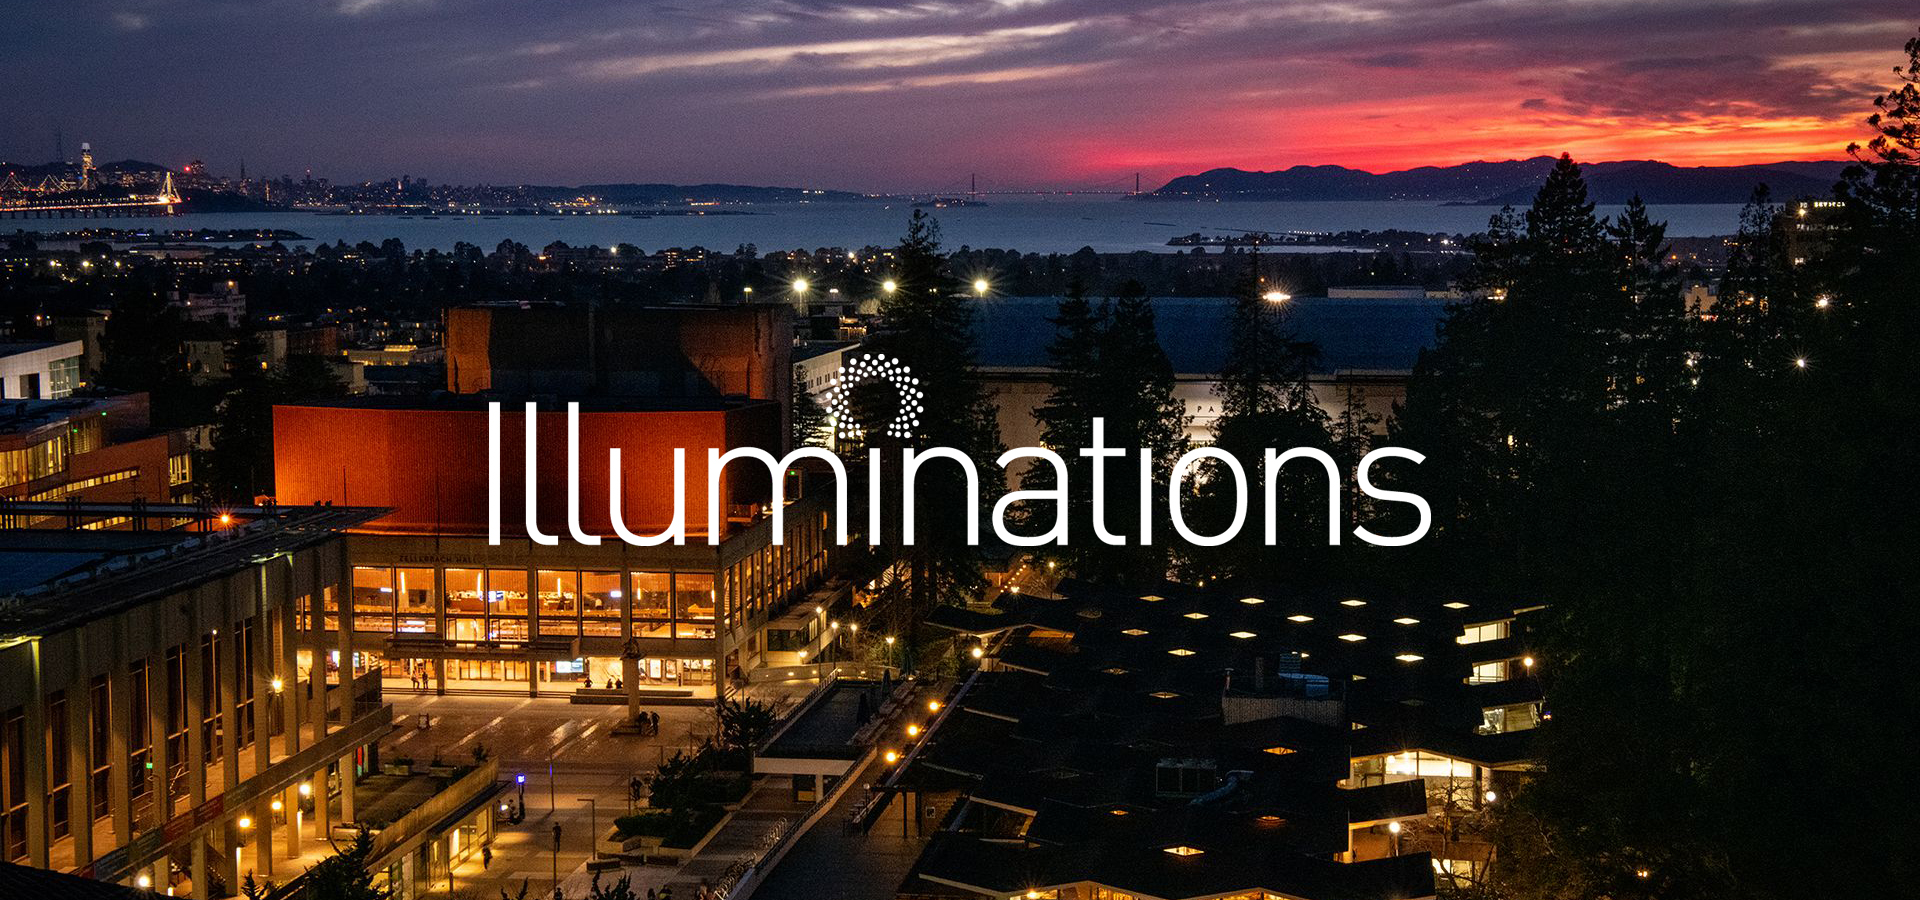 Illuminations at Sunset over Zellerbach Hall